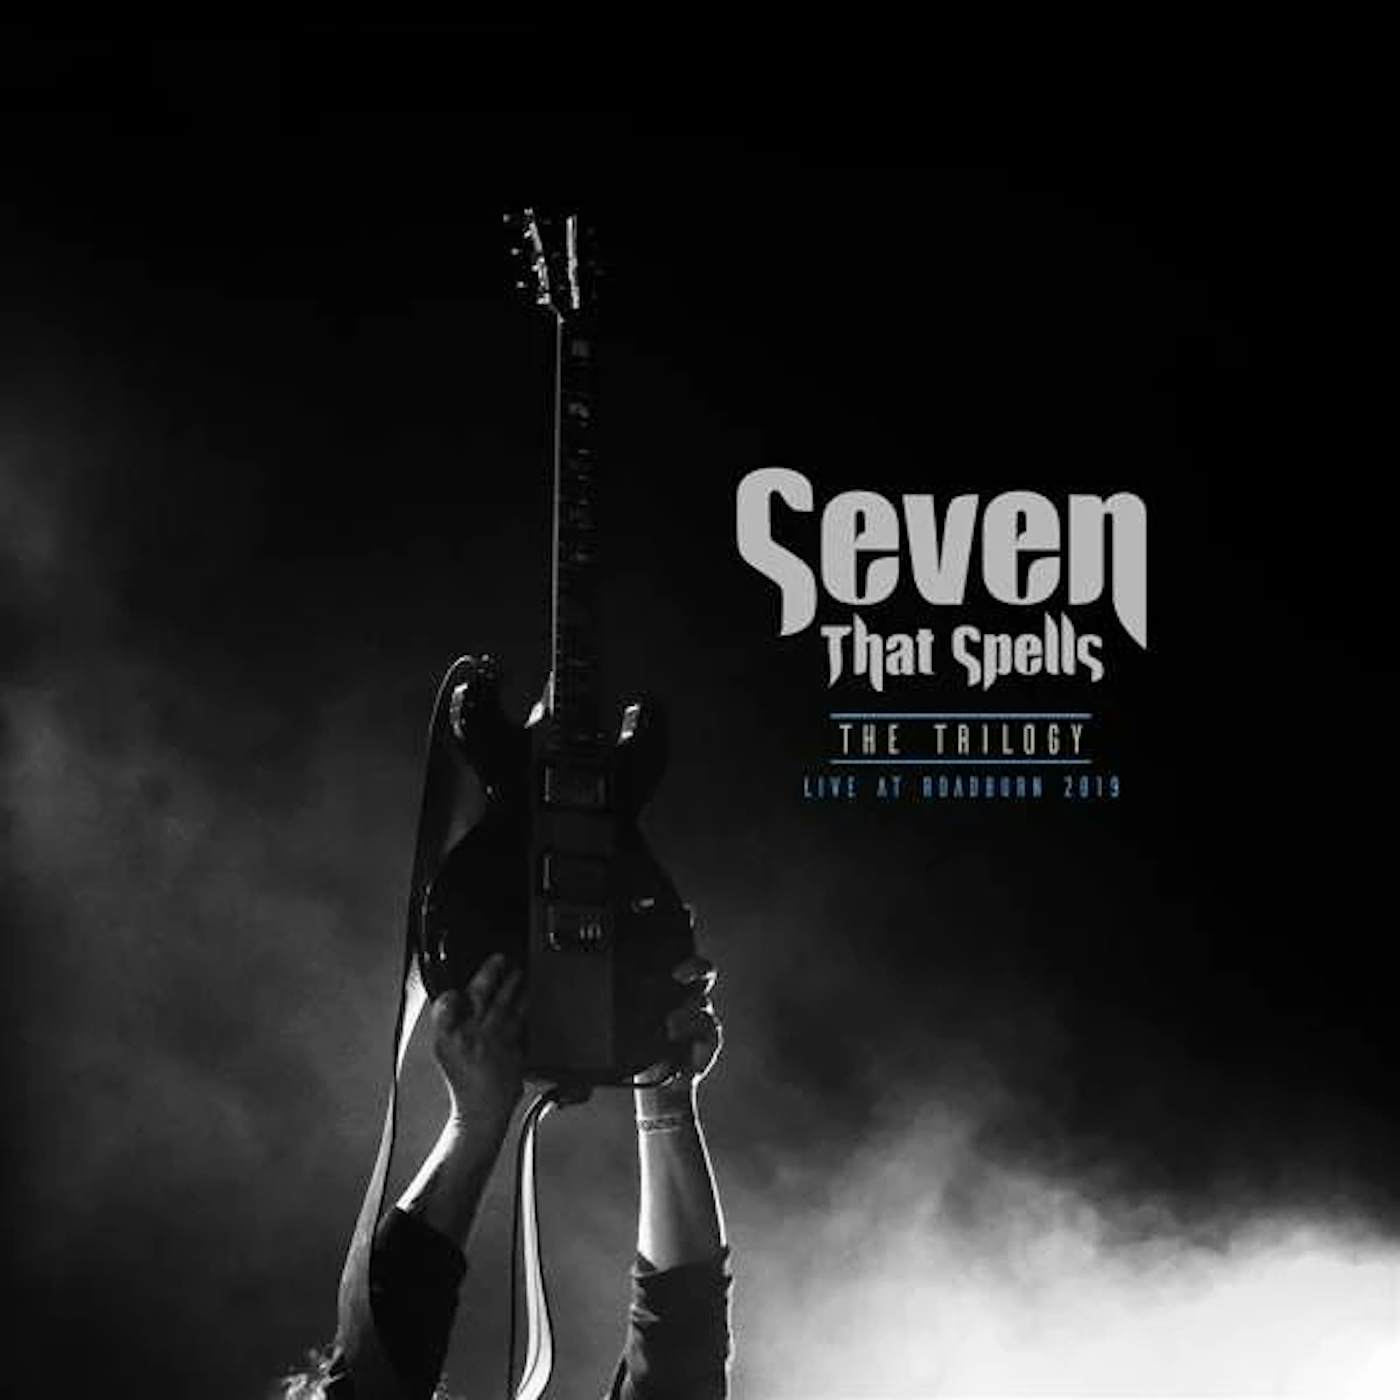 Seven that Spells The Trilogy (Live At Roadburn 2019) Vinyl Record